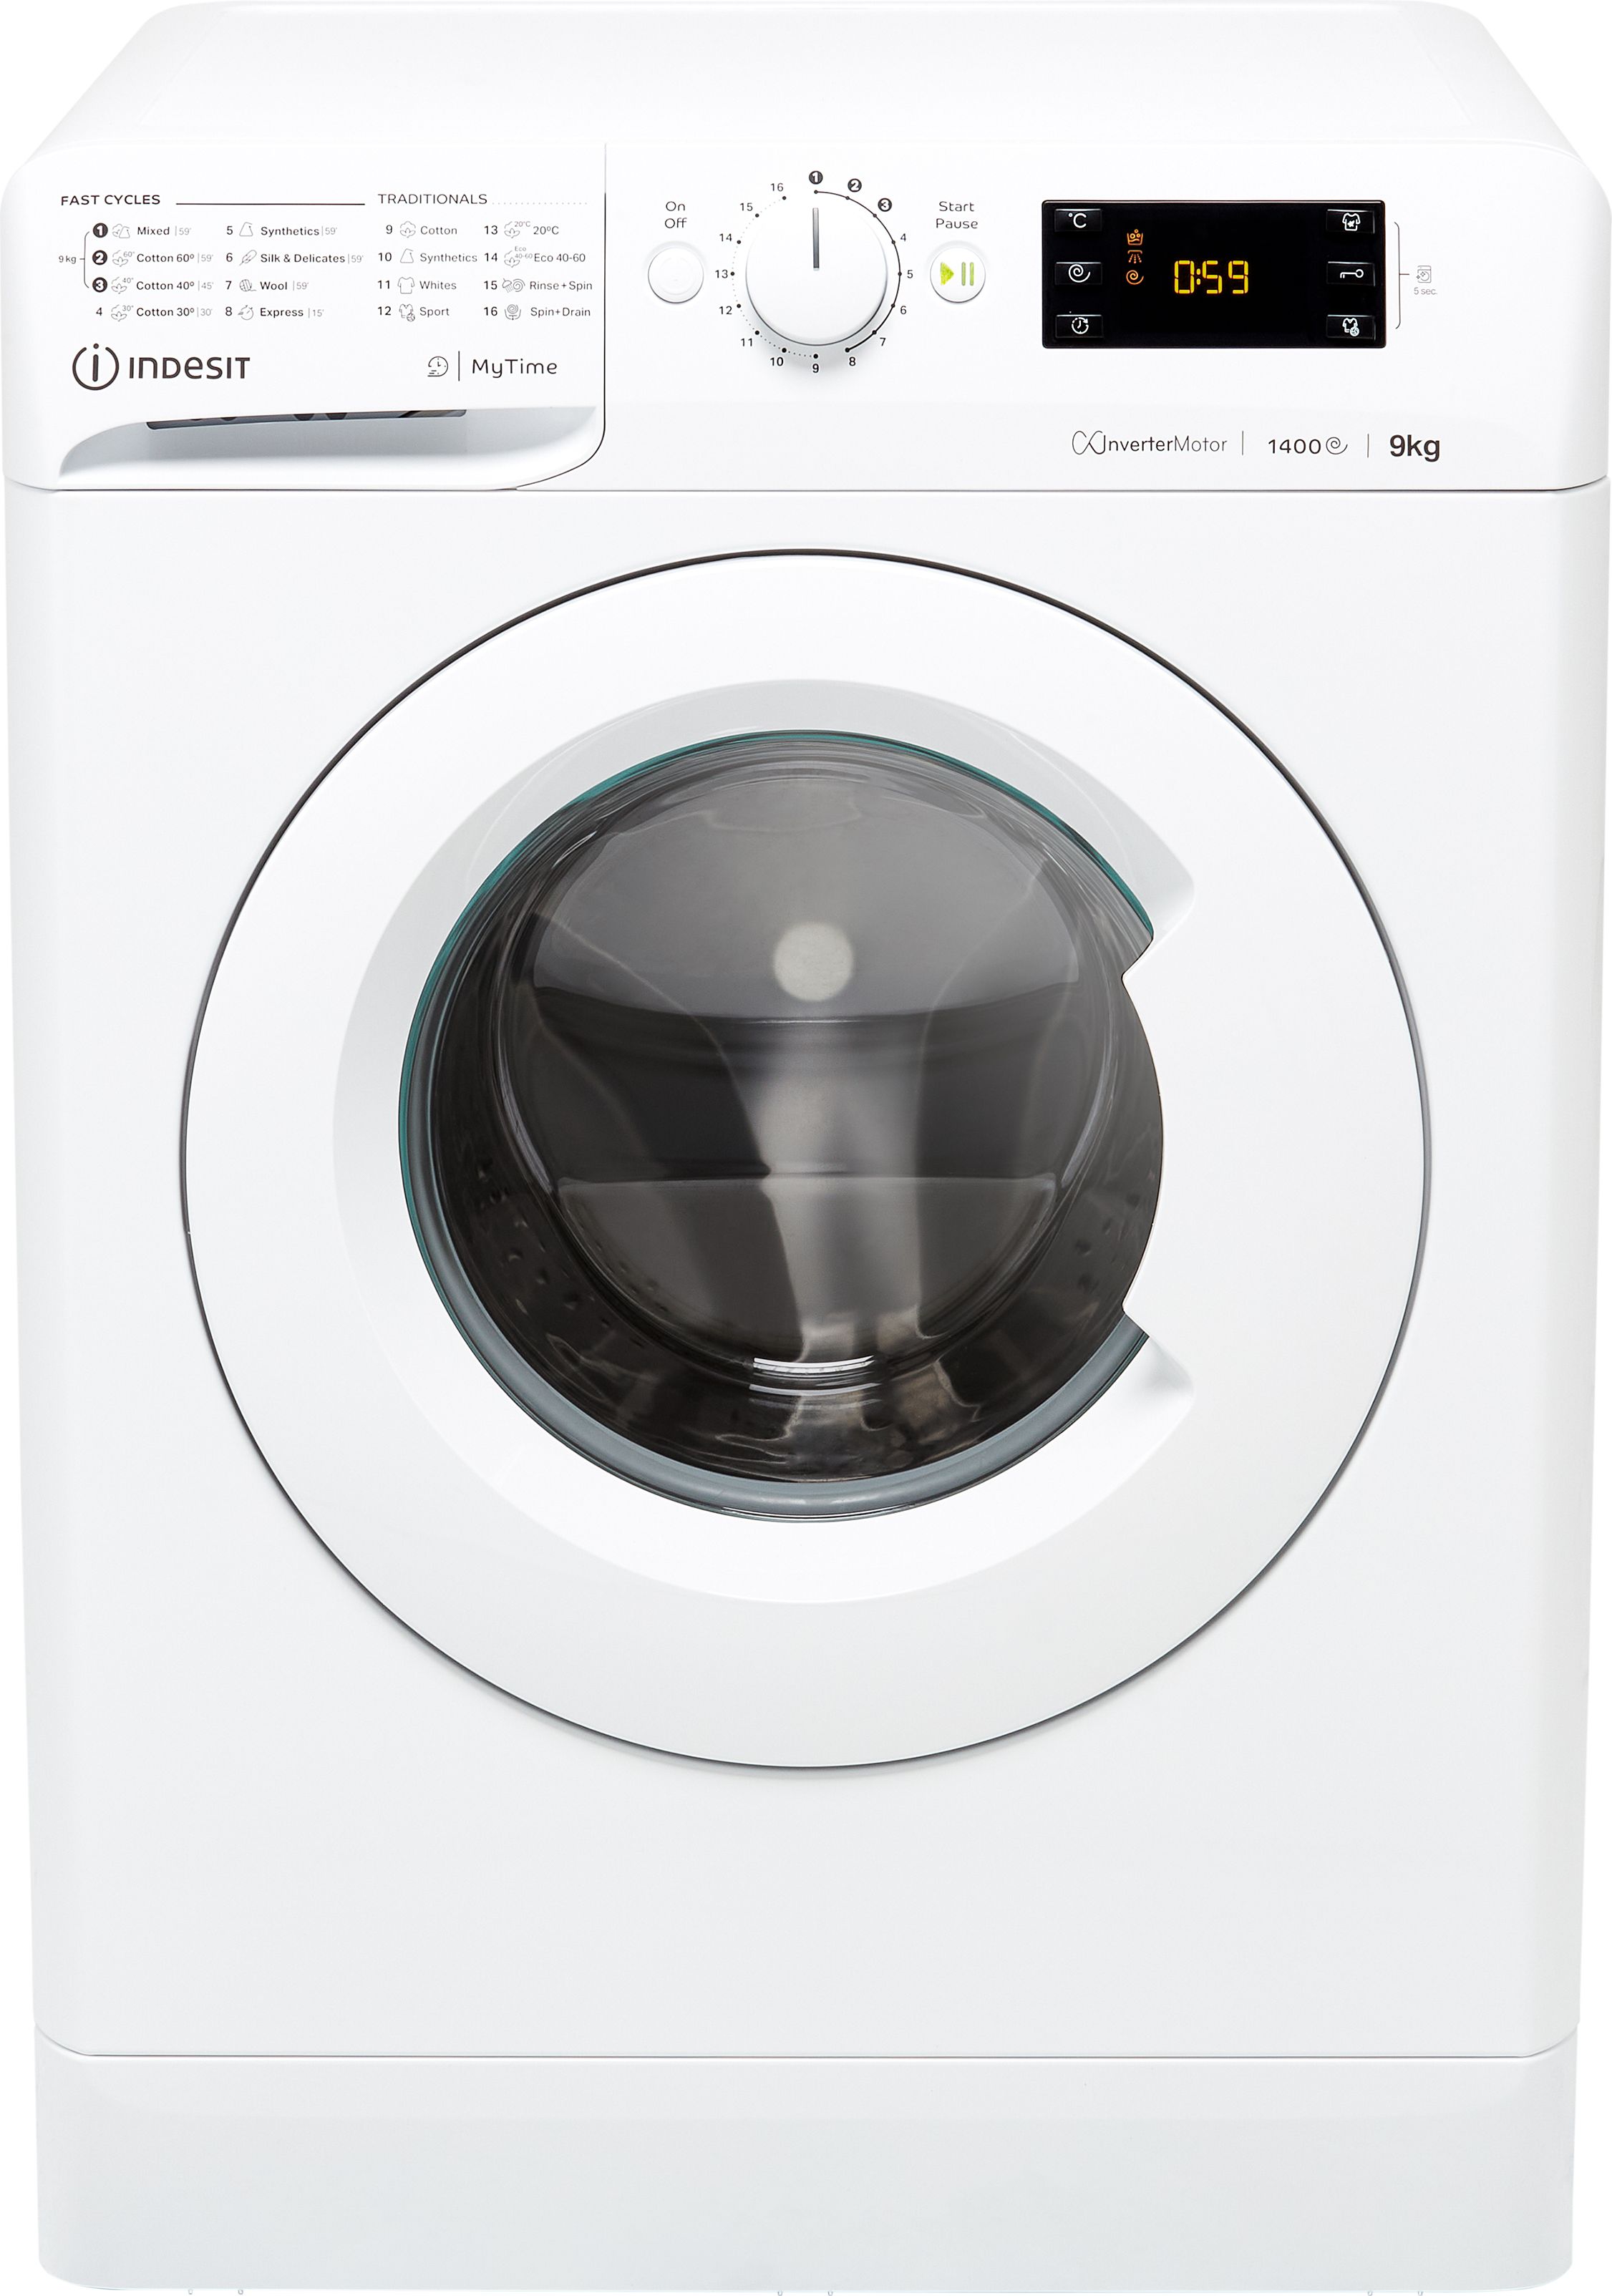 Indesit MTWE91495WUKN 9kg Washing Machine with 1400 rpm - White - B Rated, White